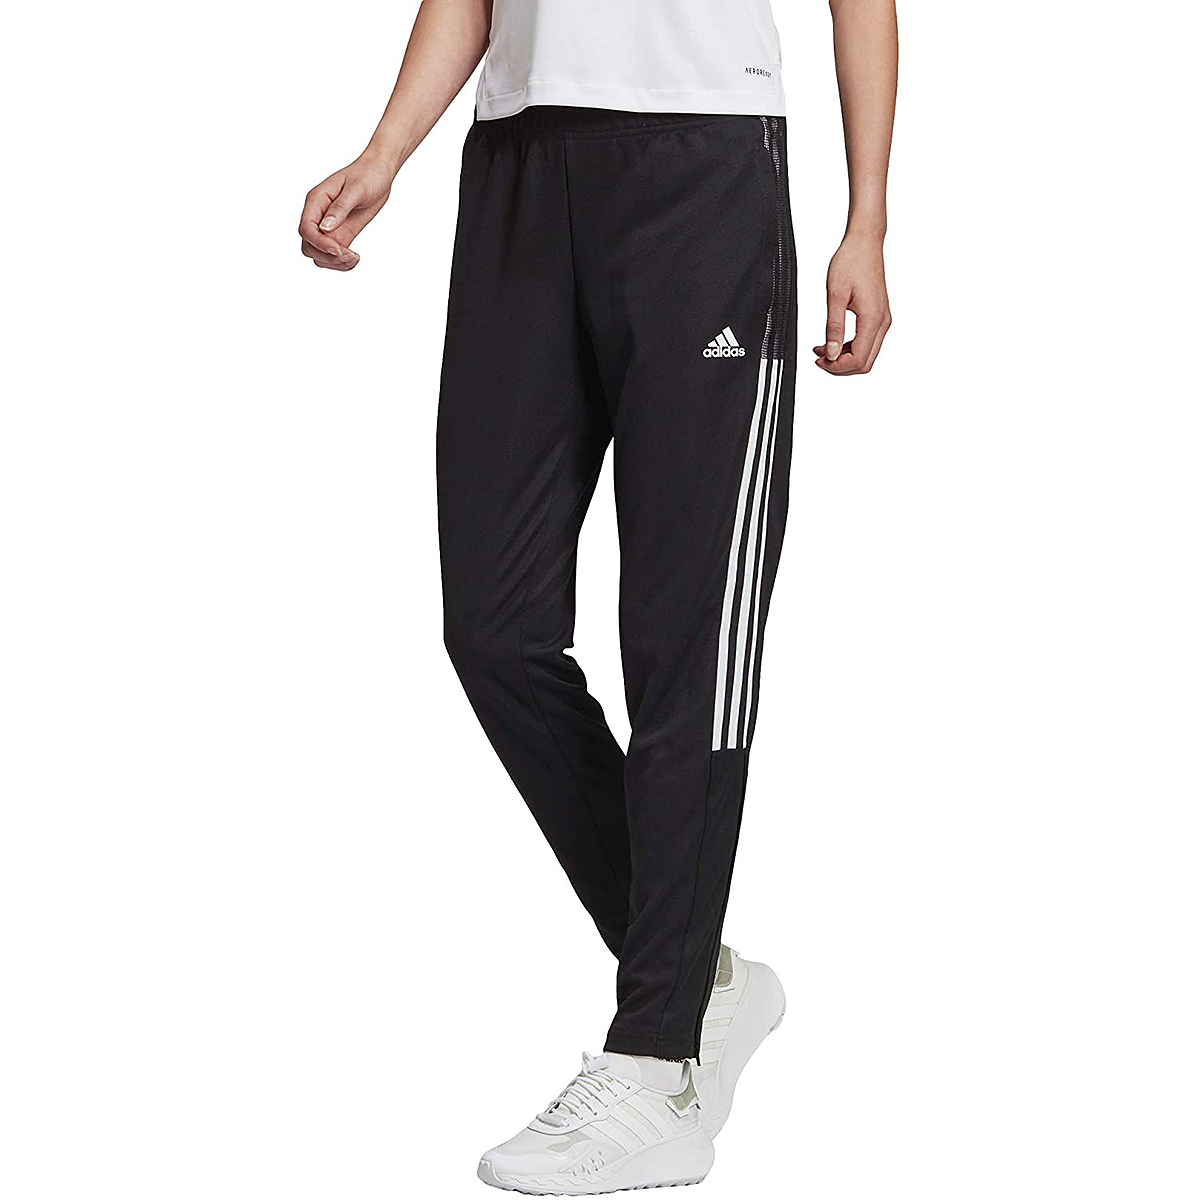 Adidas Women's Track Pants Size S Dark Gray Pink Side Stripes Workout  Activewear | eBay